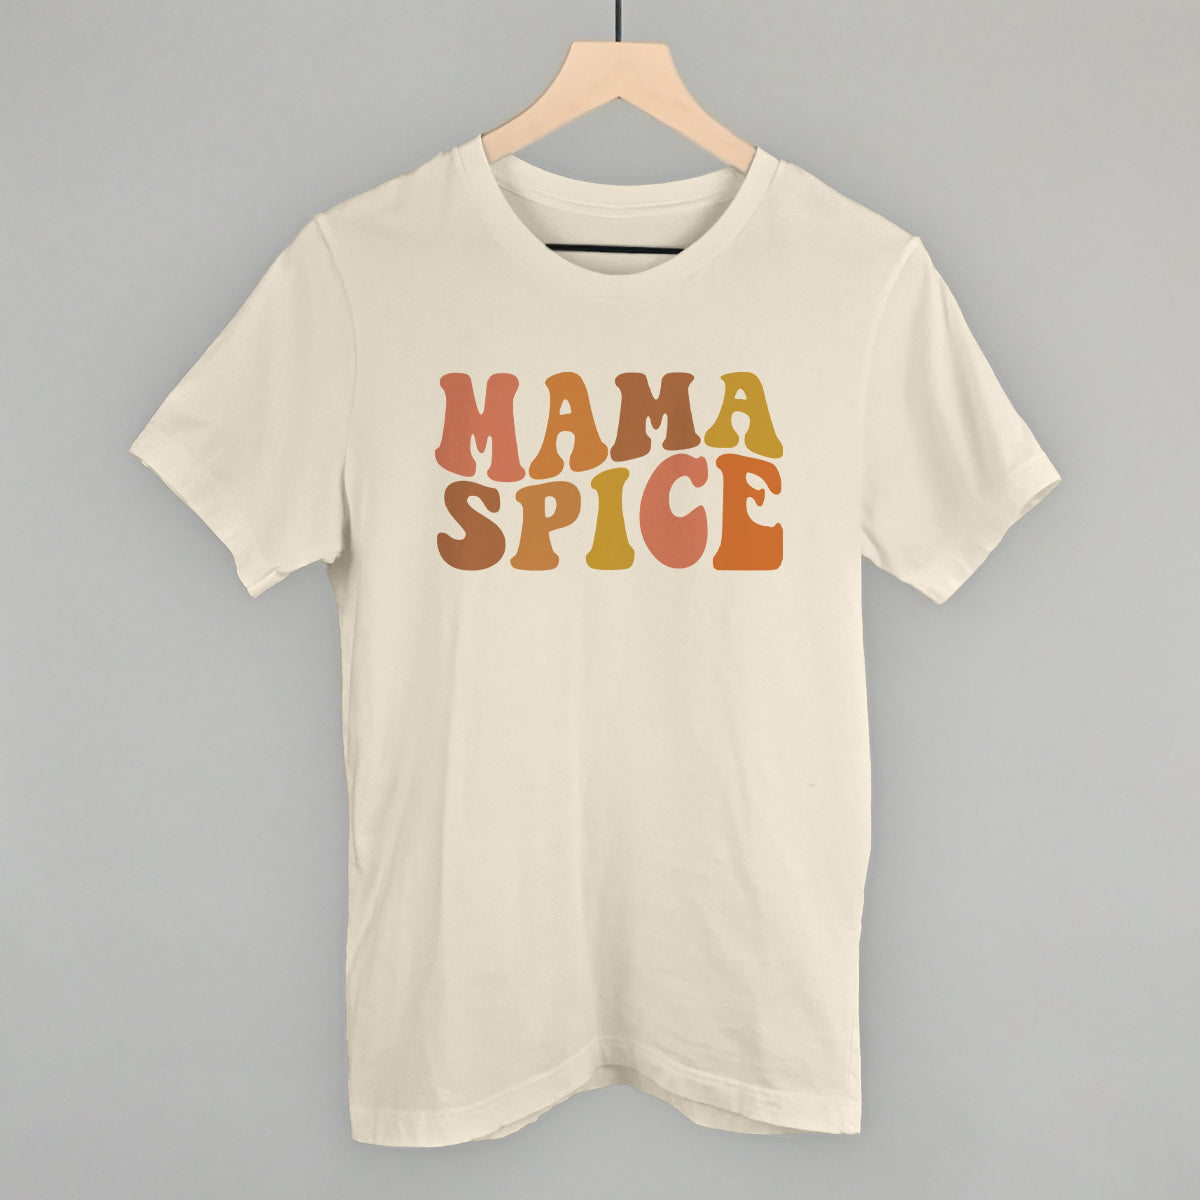 Mama Spice + Baby Spice (Kids)